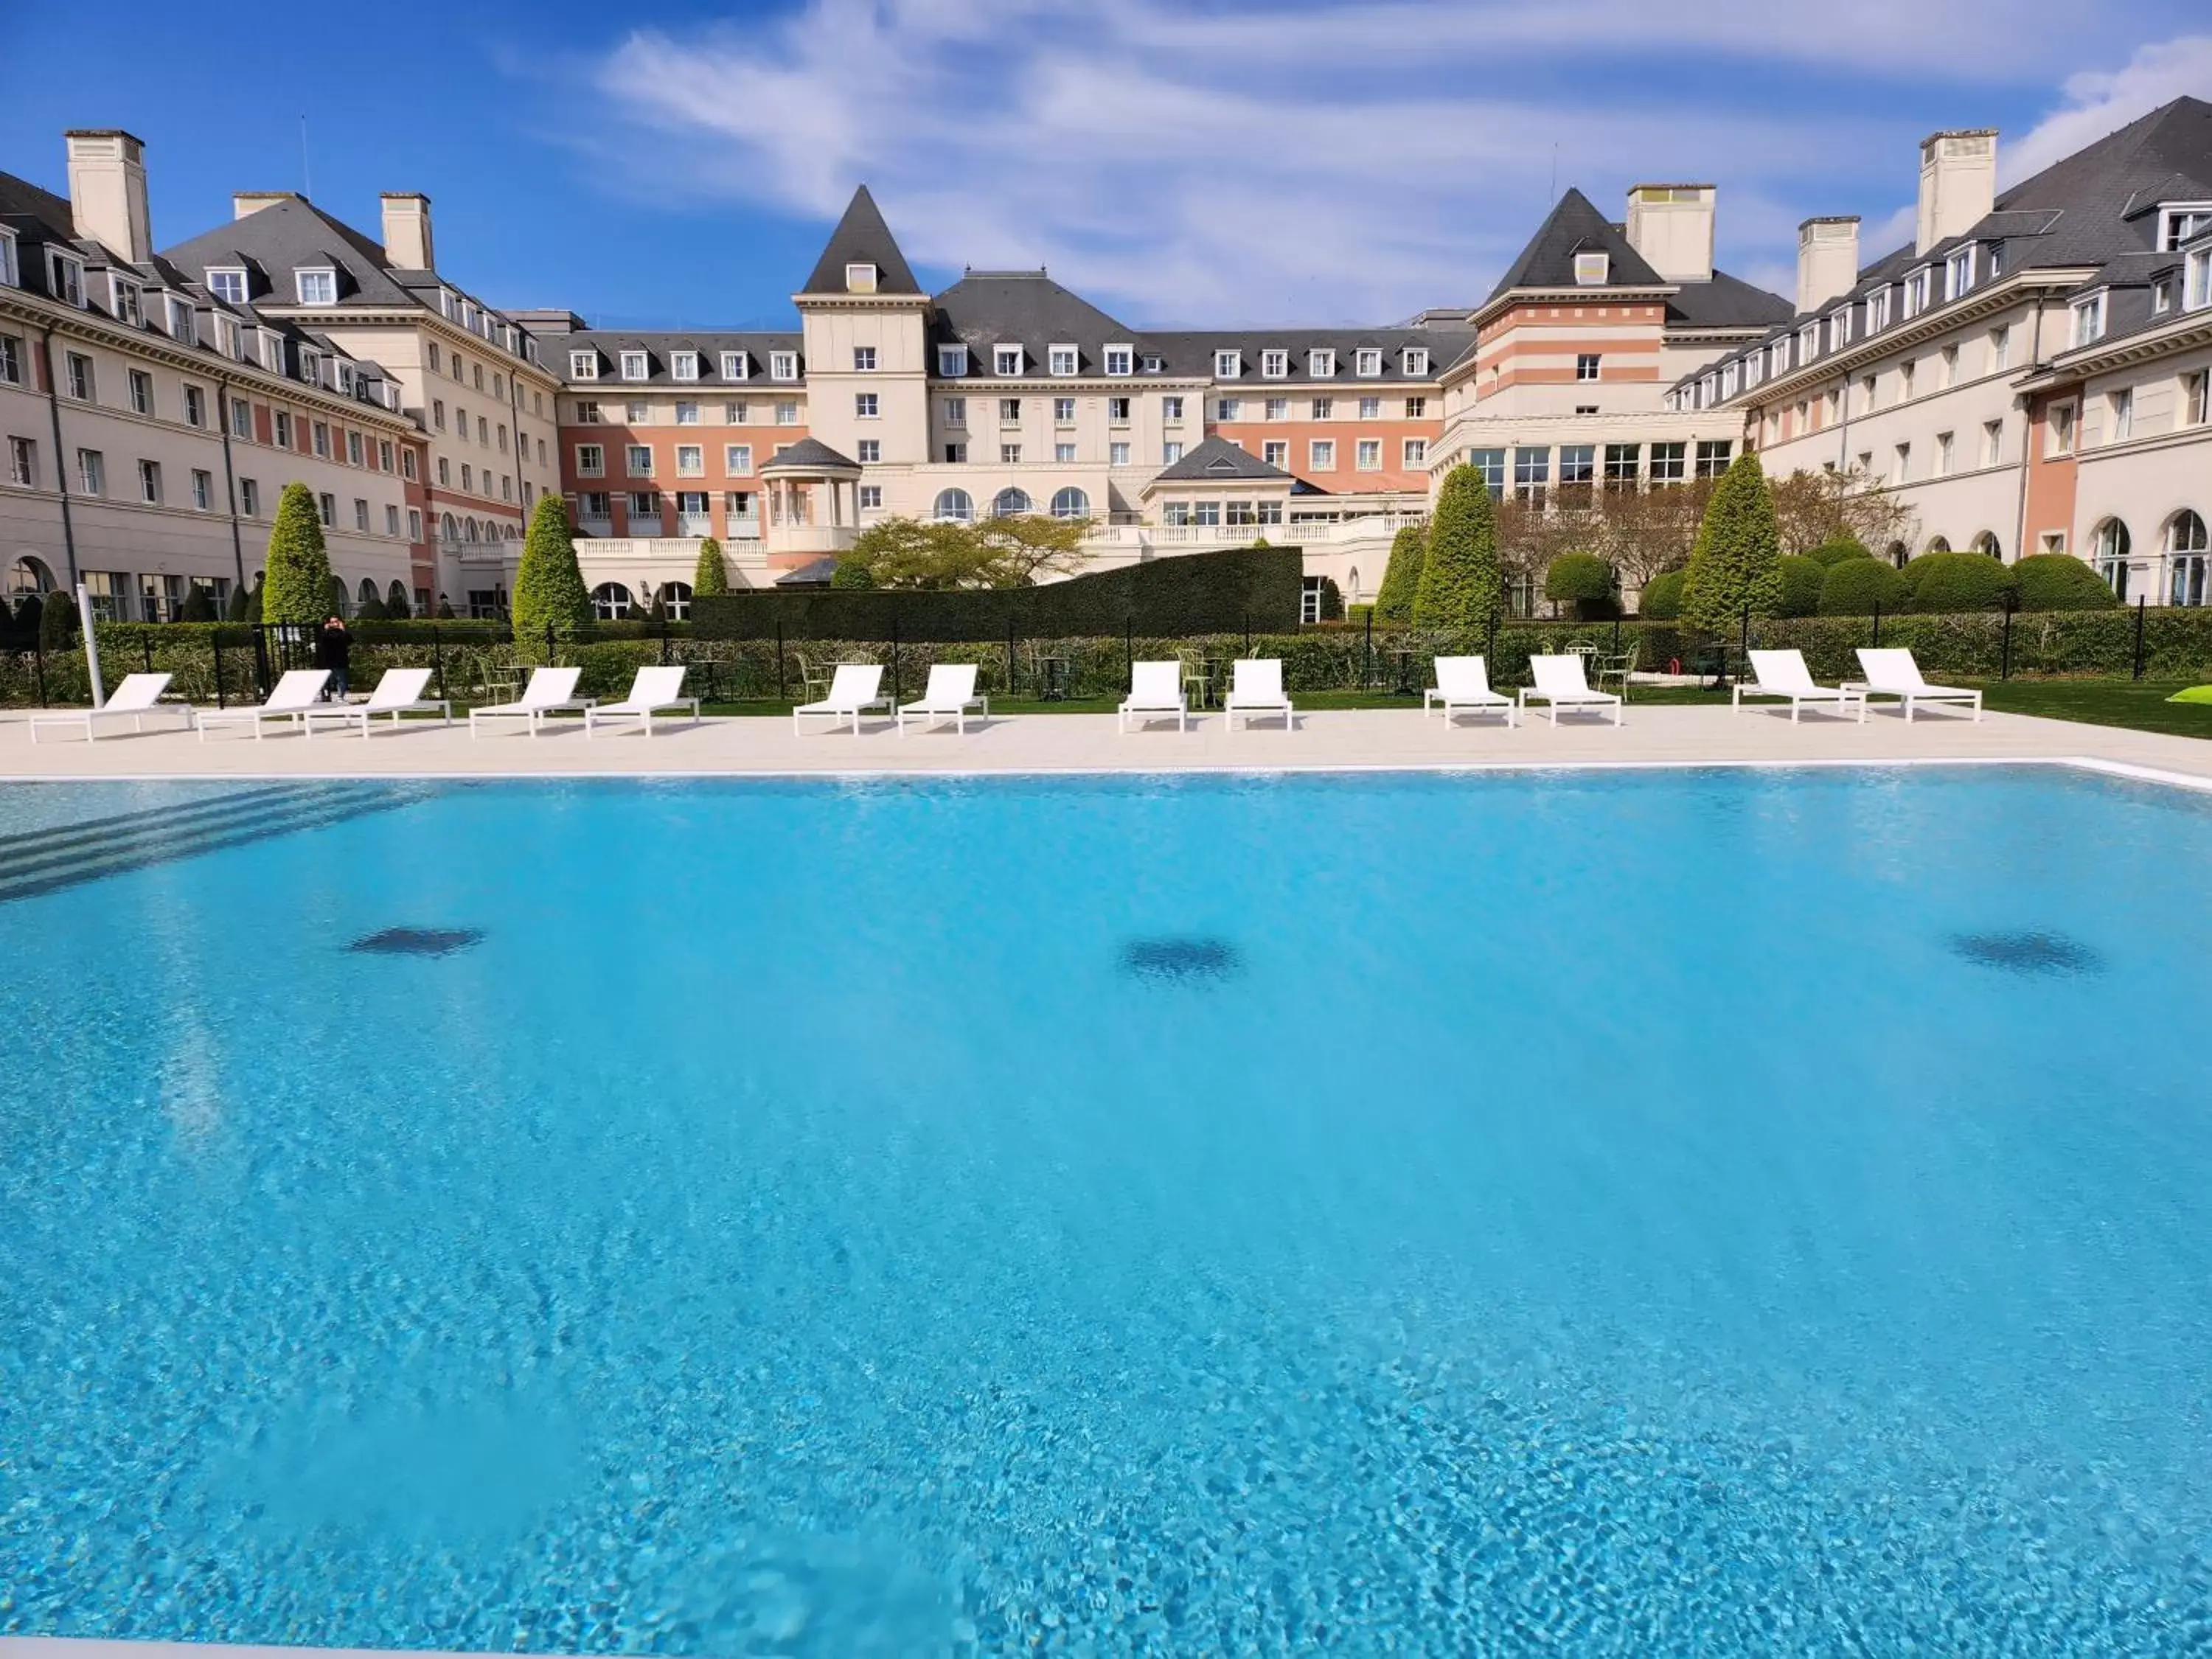 Swimming pool, Property Building in Dream Castle Hotel Marne La Vallee